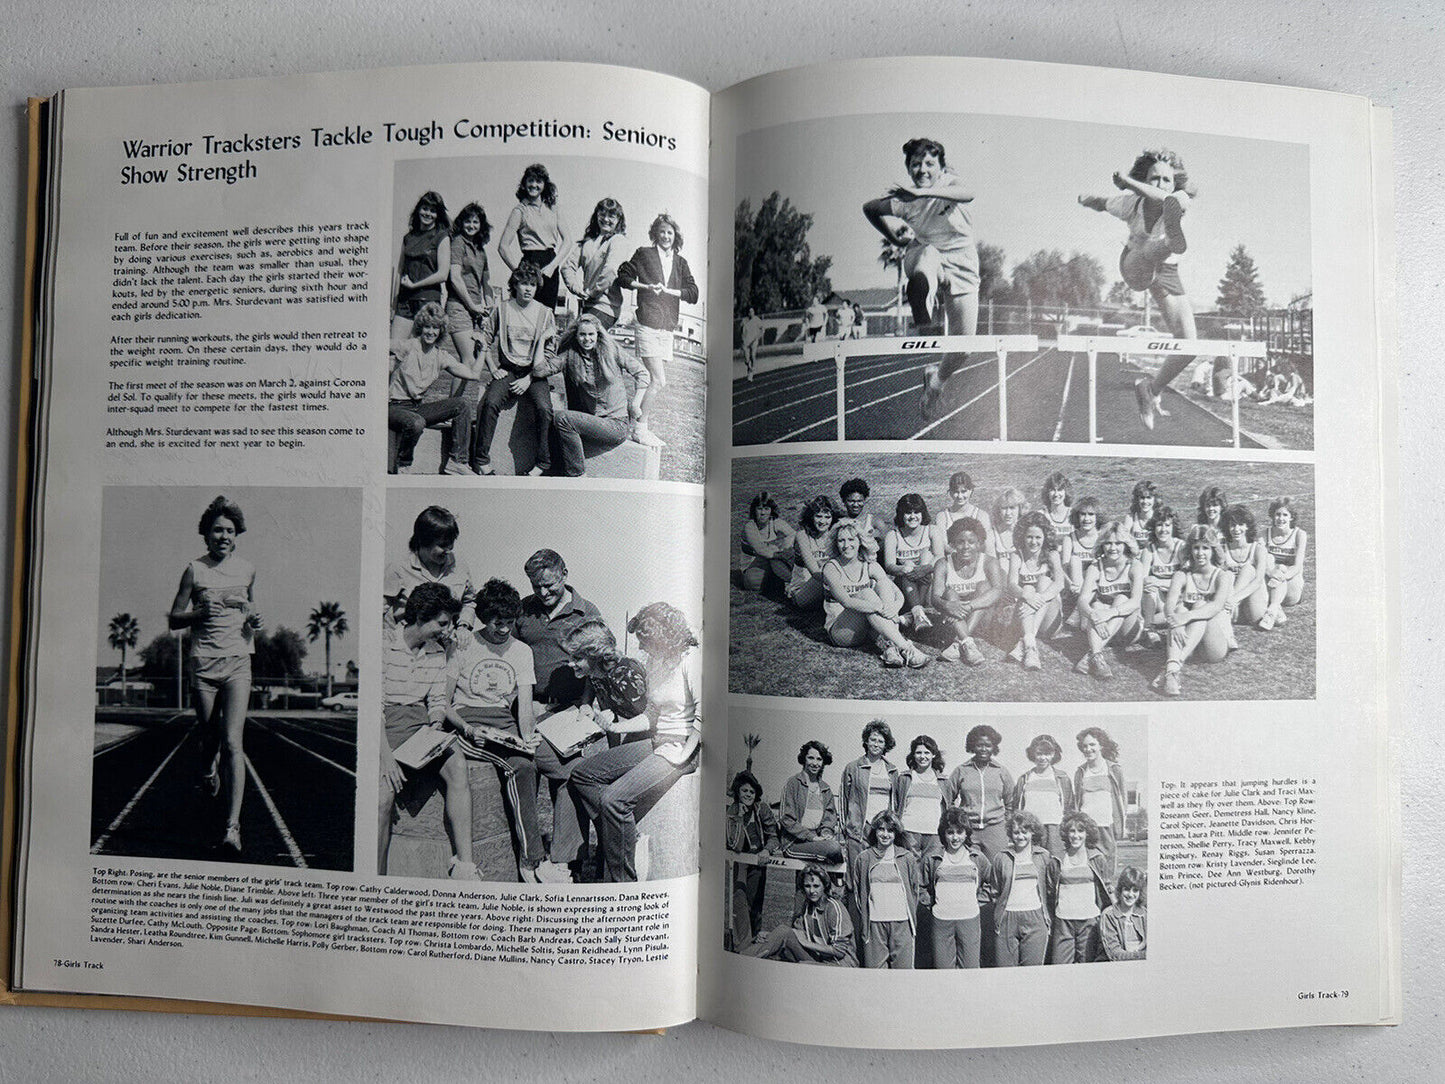 1983 Westwood High School Yearbook – Mesa, Arizona - Colorful Autographed Memories - TreasuTiques